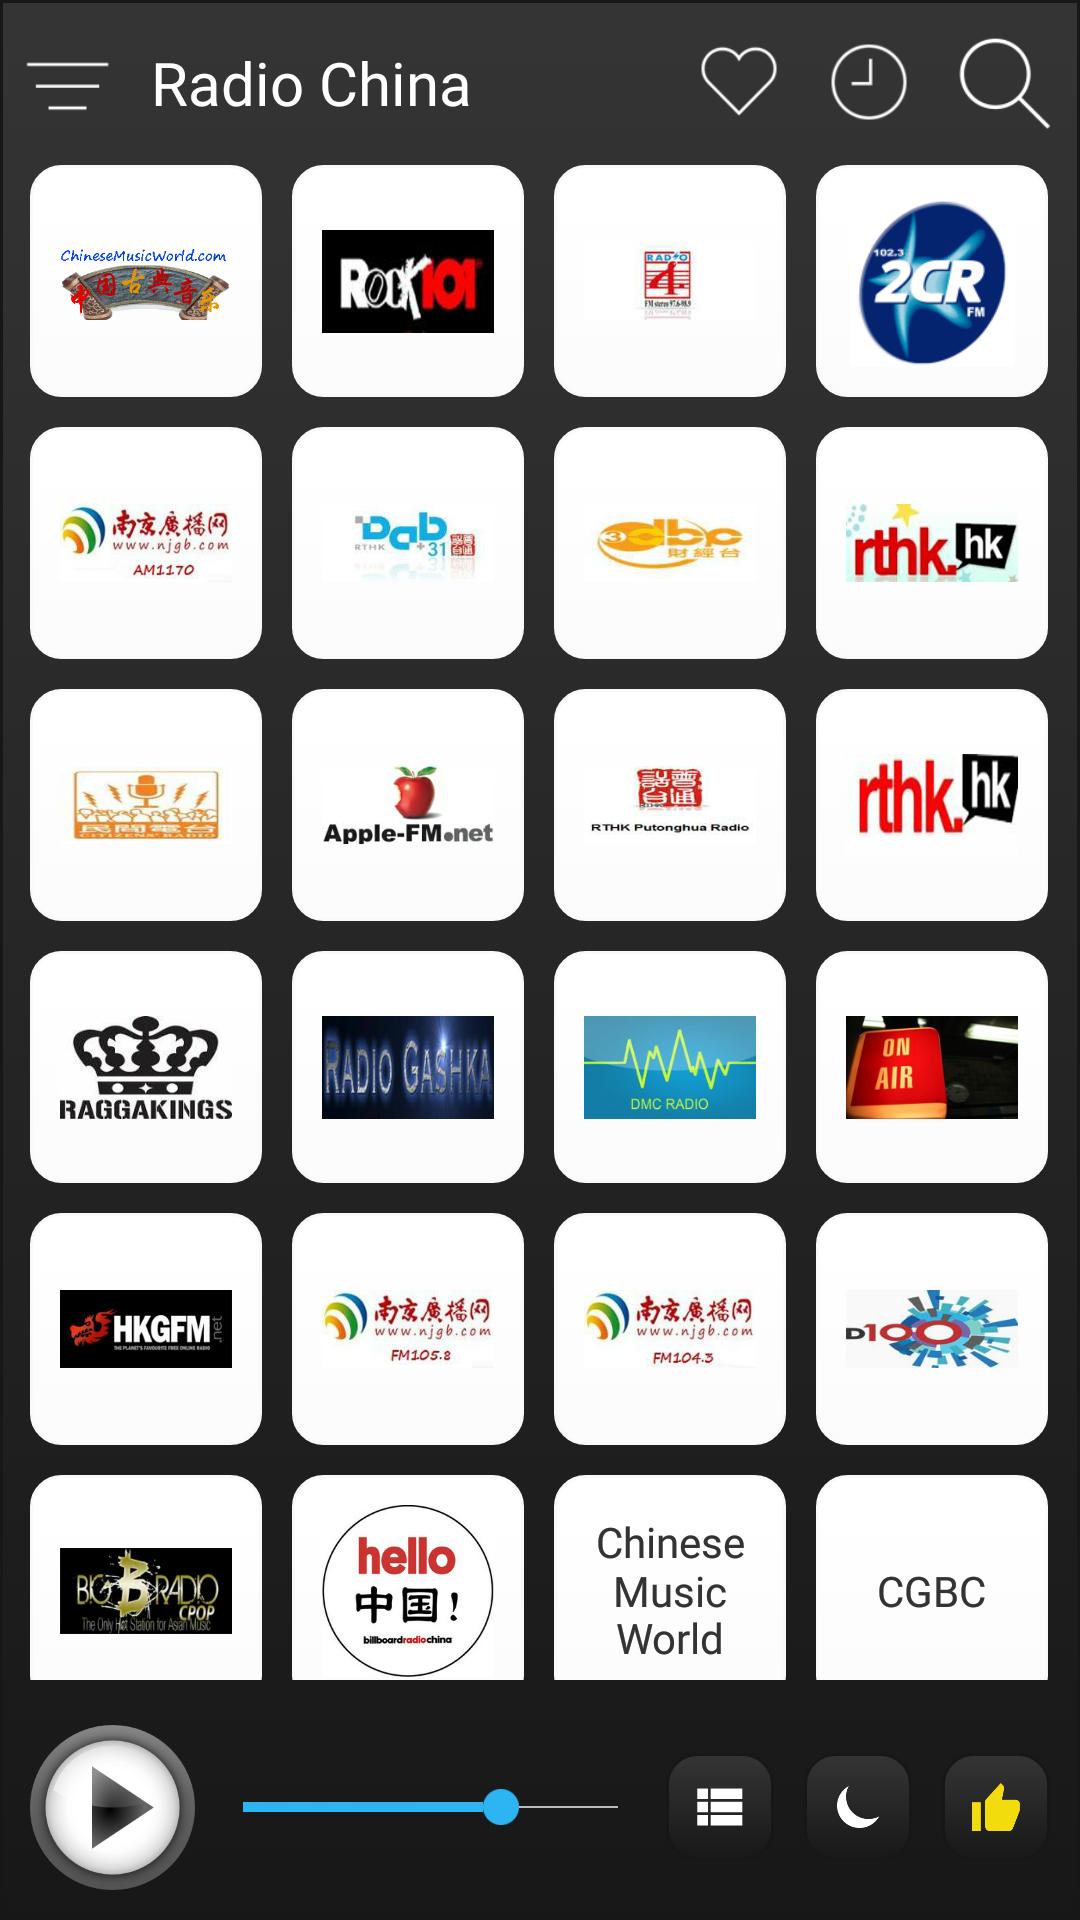 China Radio Stations Online - Chinese FM AM Music для Андроид - скачать APK